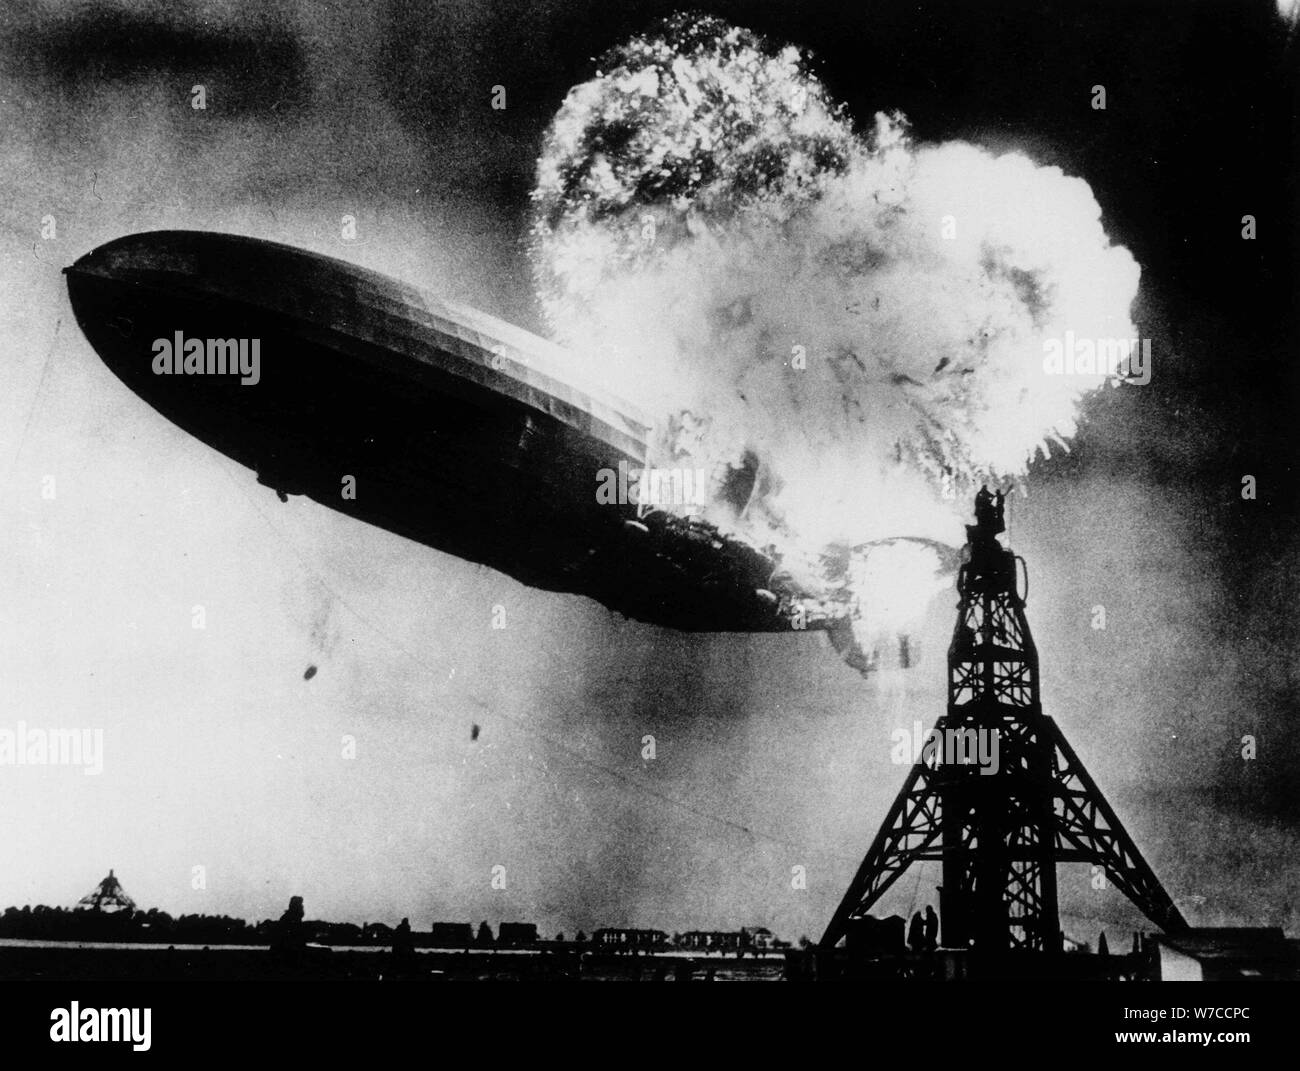 The Hindenburg disaster May 6, 1937 in Lakehurst. Stock Photo